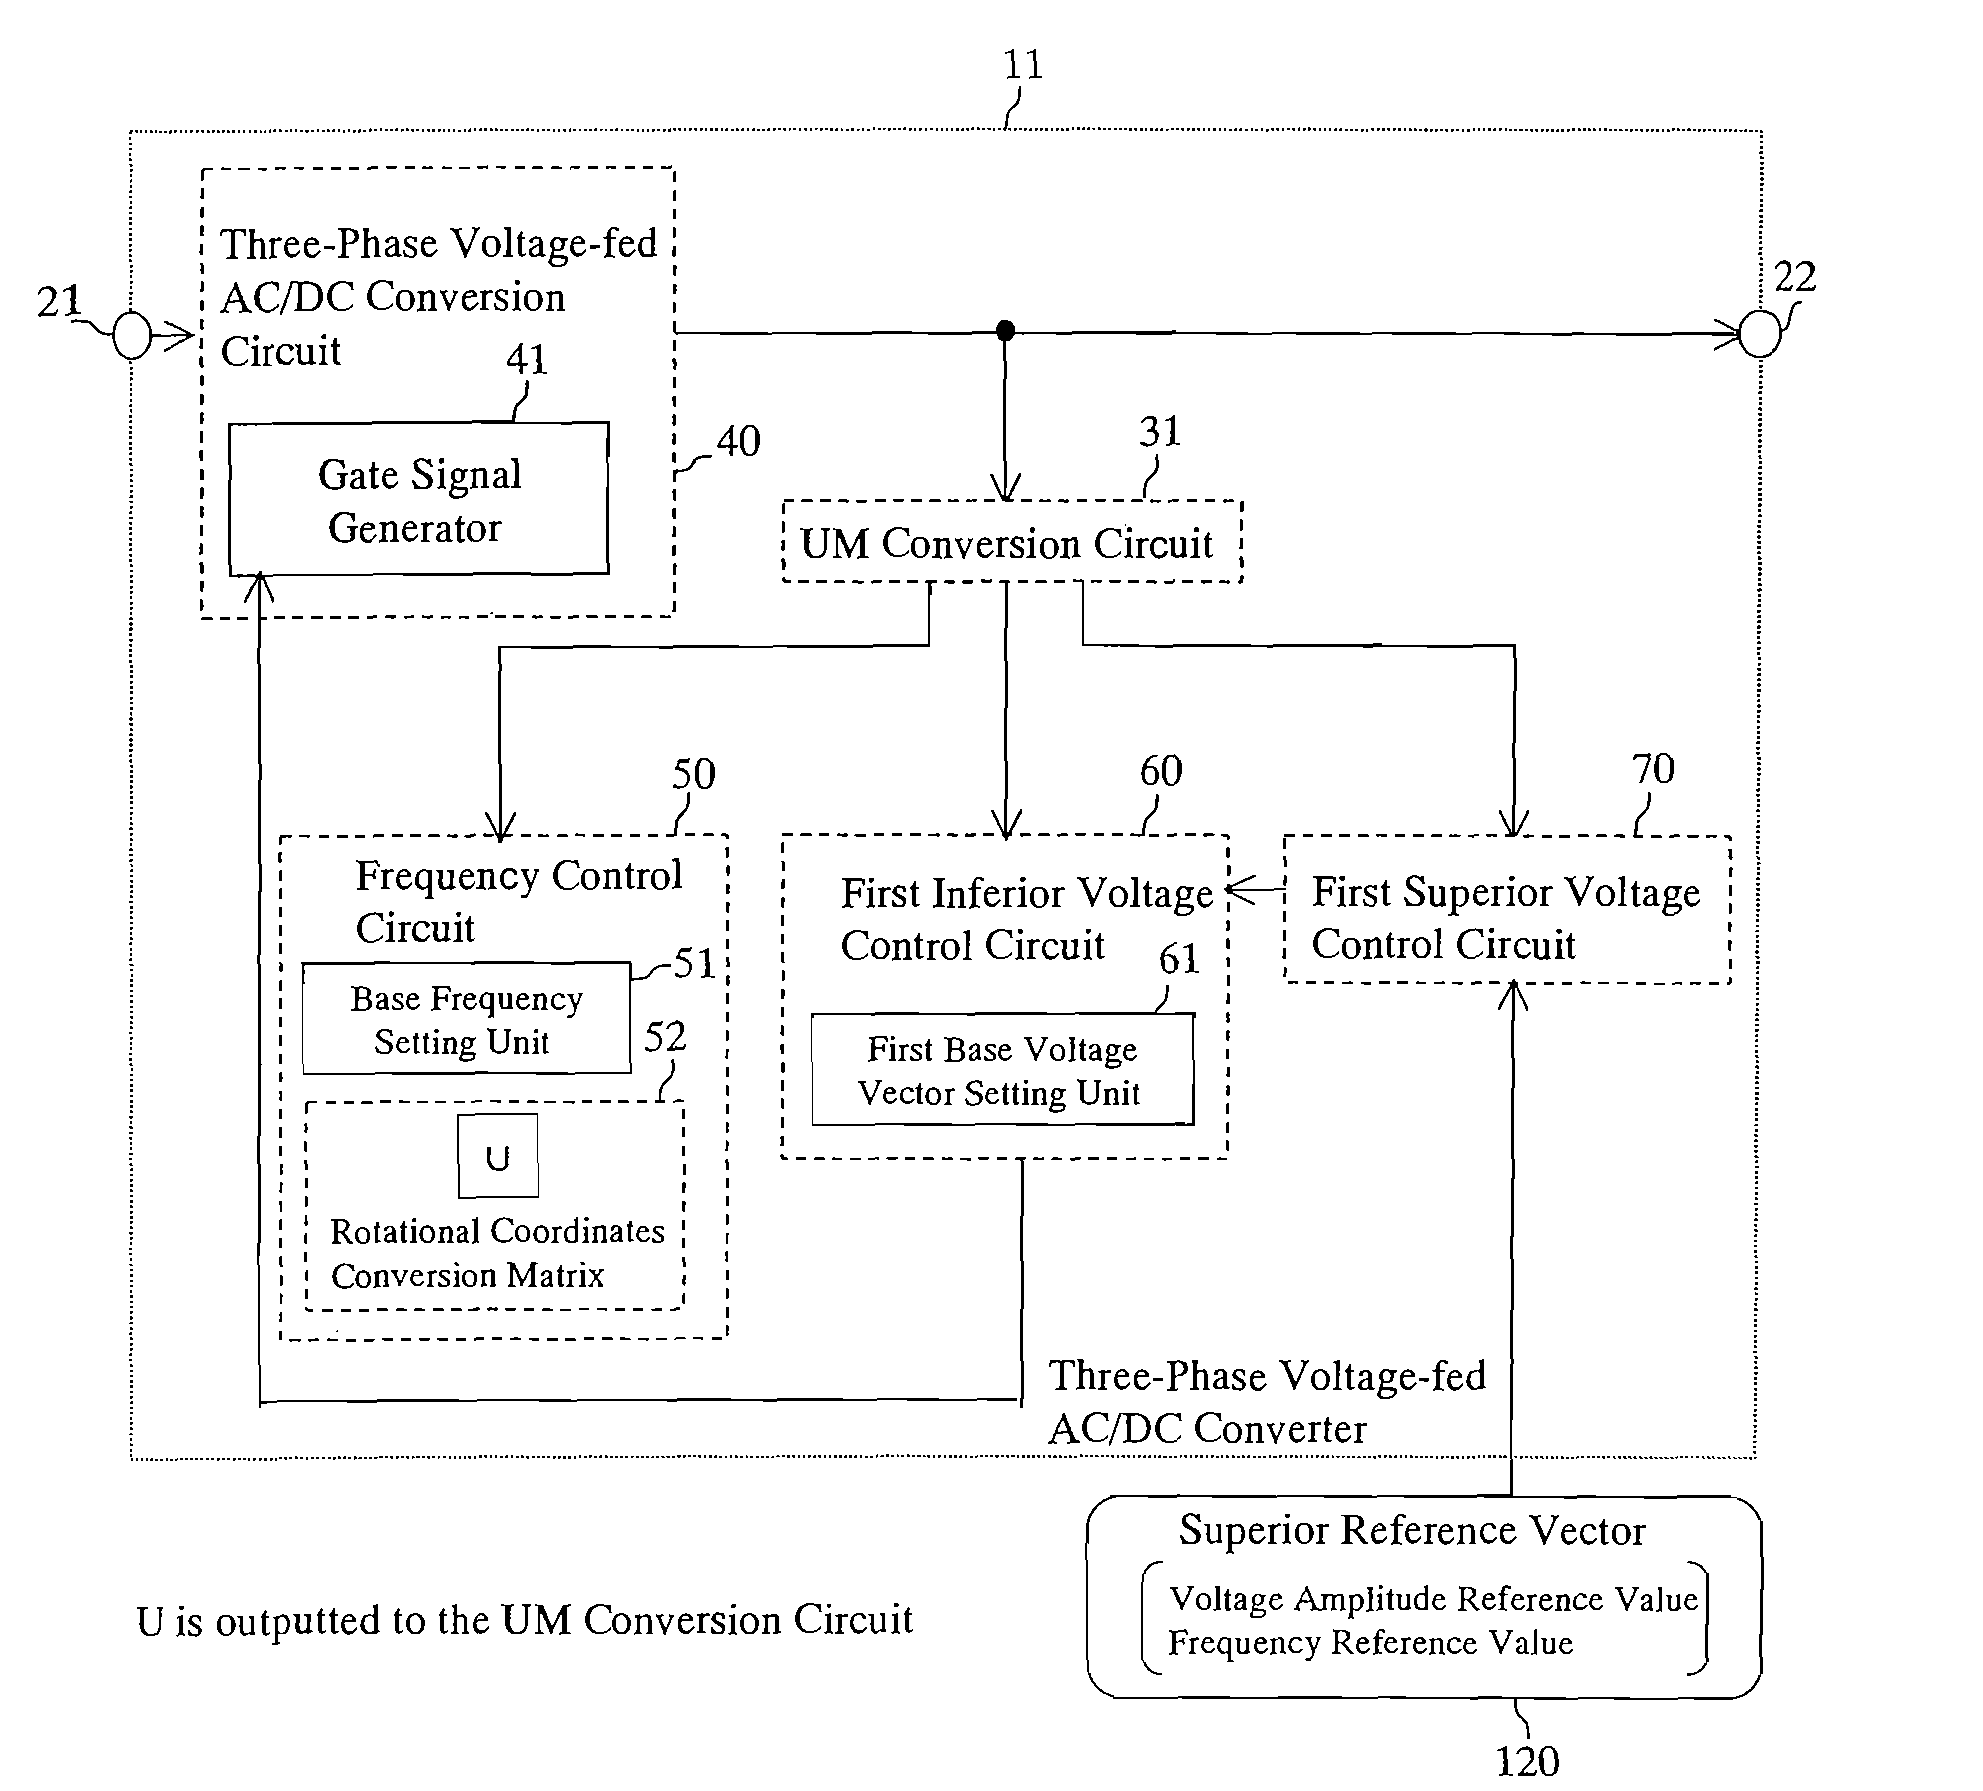 Three-phase voltage-fed AC/DC converter